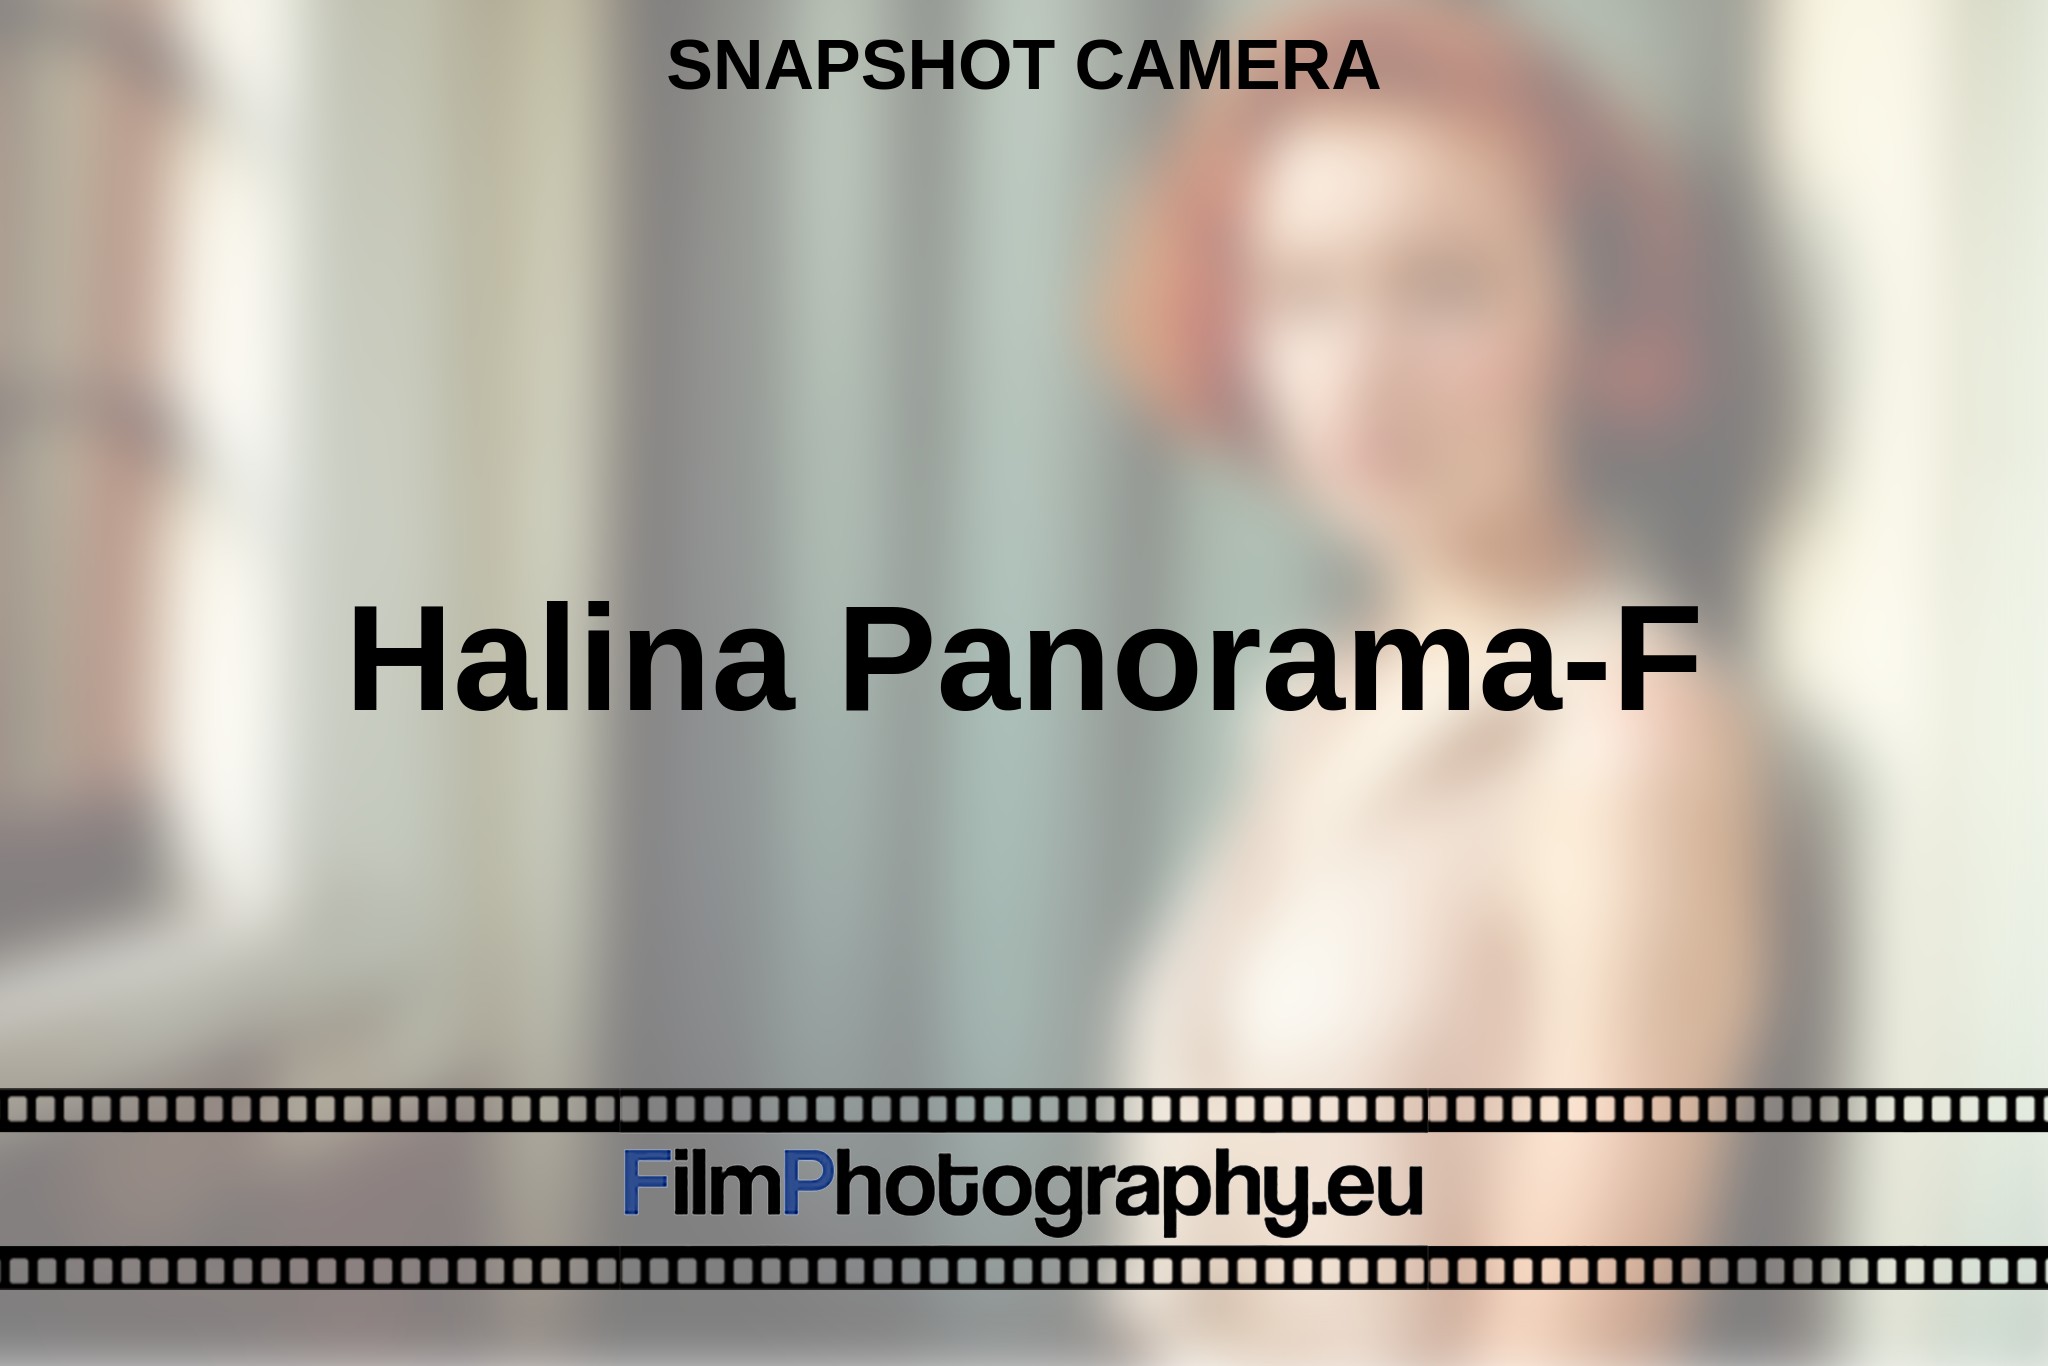 halina-panorama-f-snapshot-camera-en-bnv.jpg